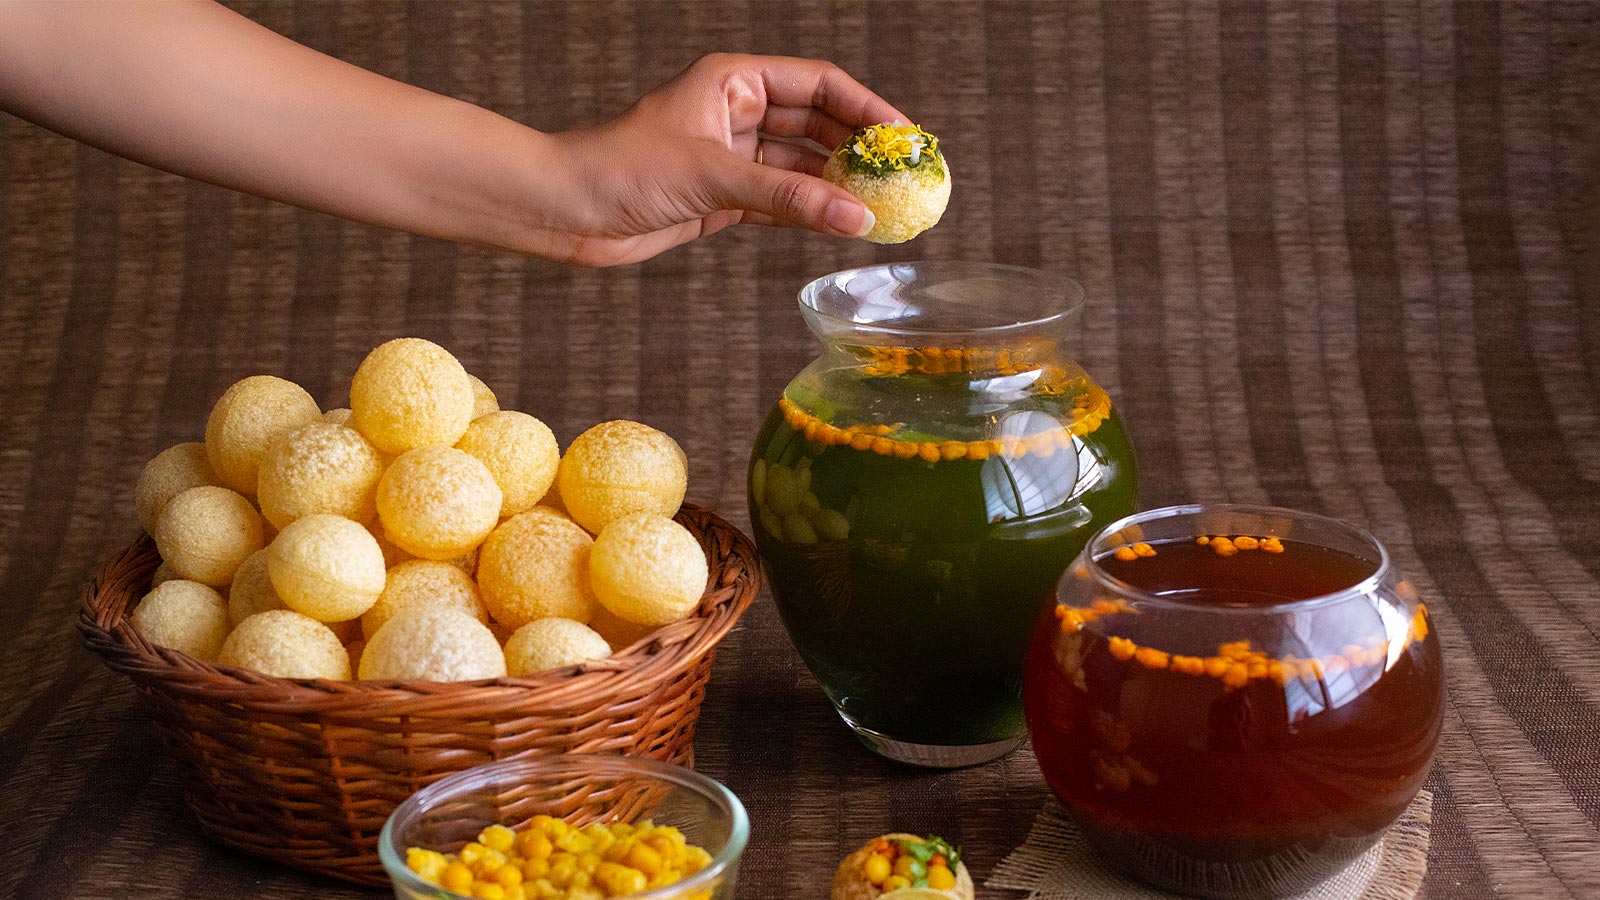 Google Doodle celebrates Indian street food Pani Puri with unique game